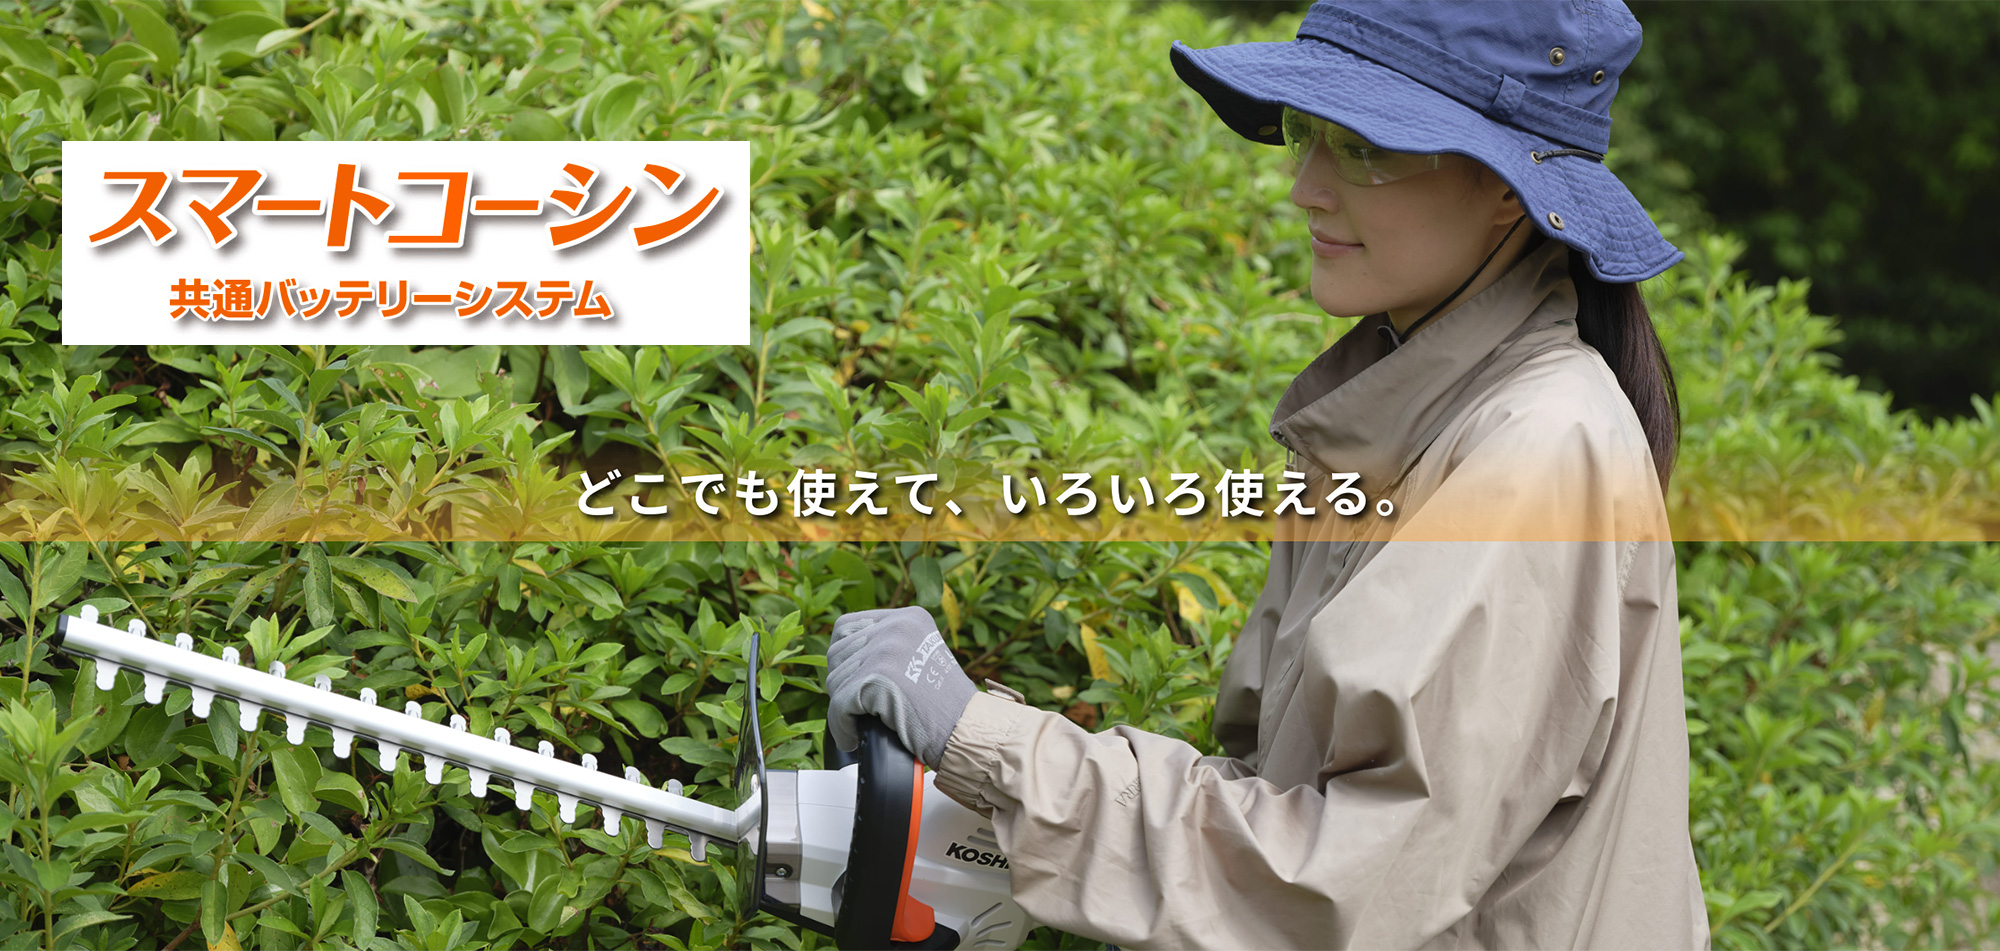 www.koshin-ltd.jp/img/top/slide-smartkoshin.jpg